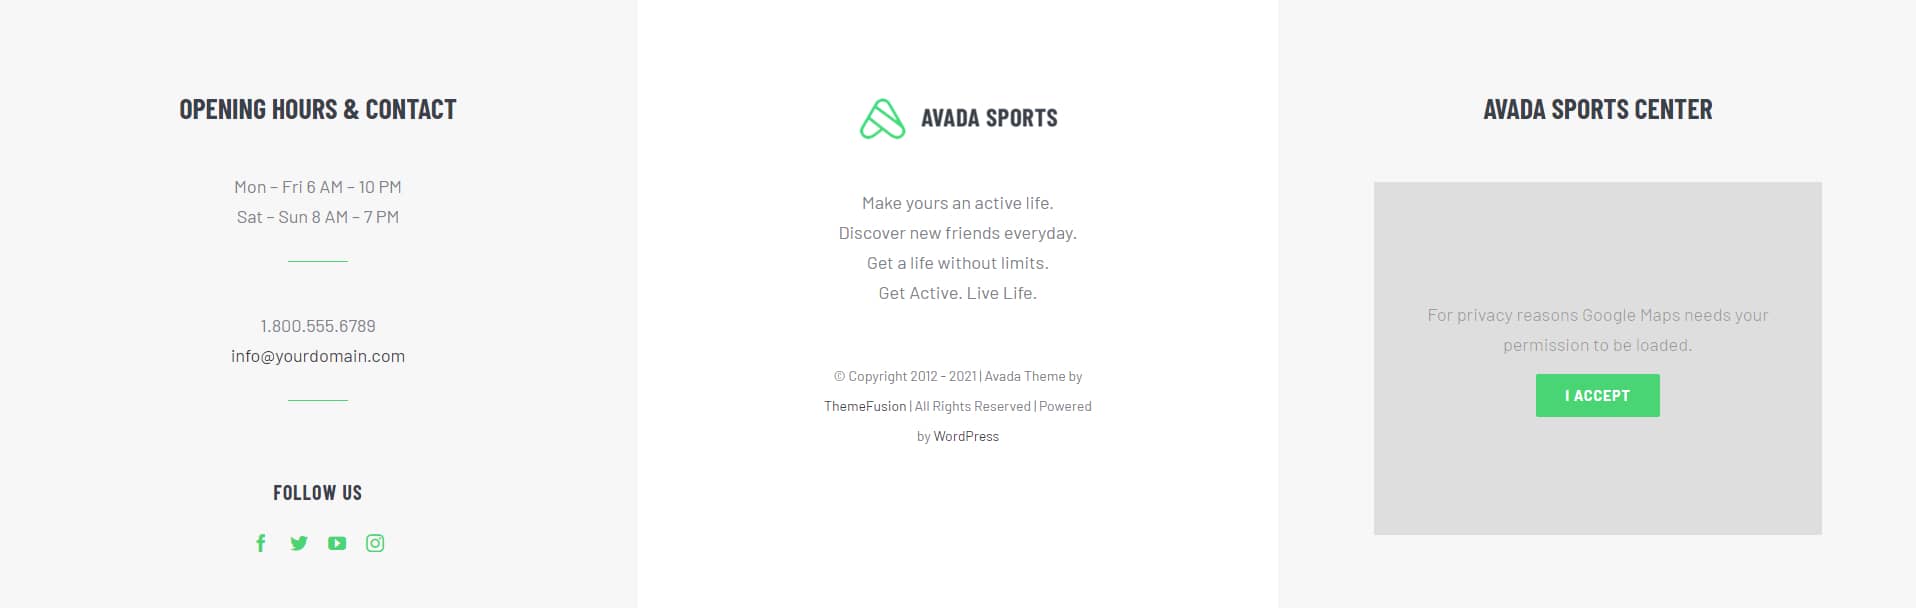 Avada Sports Footer